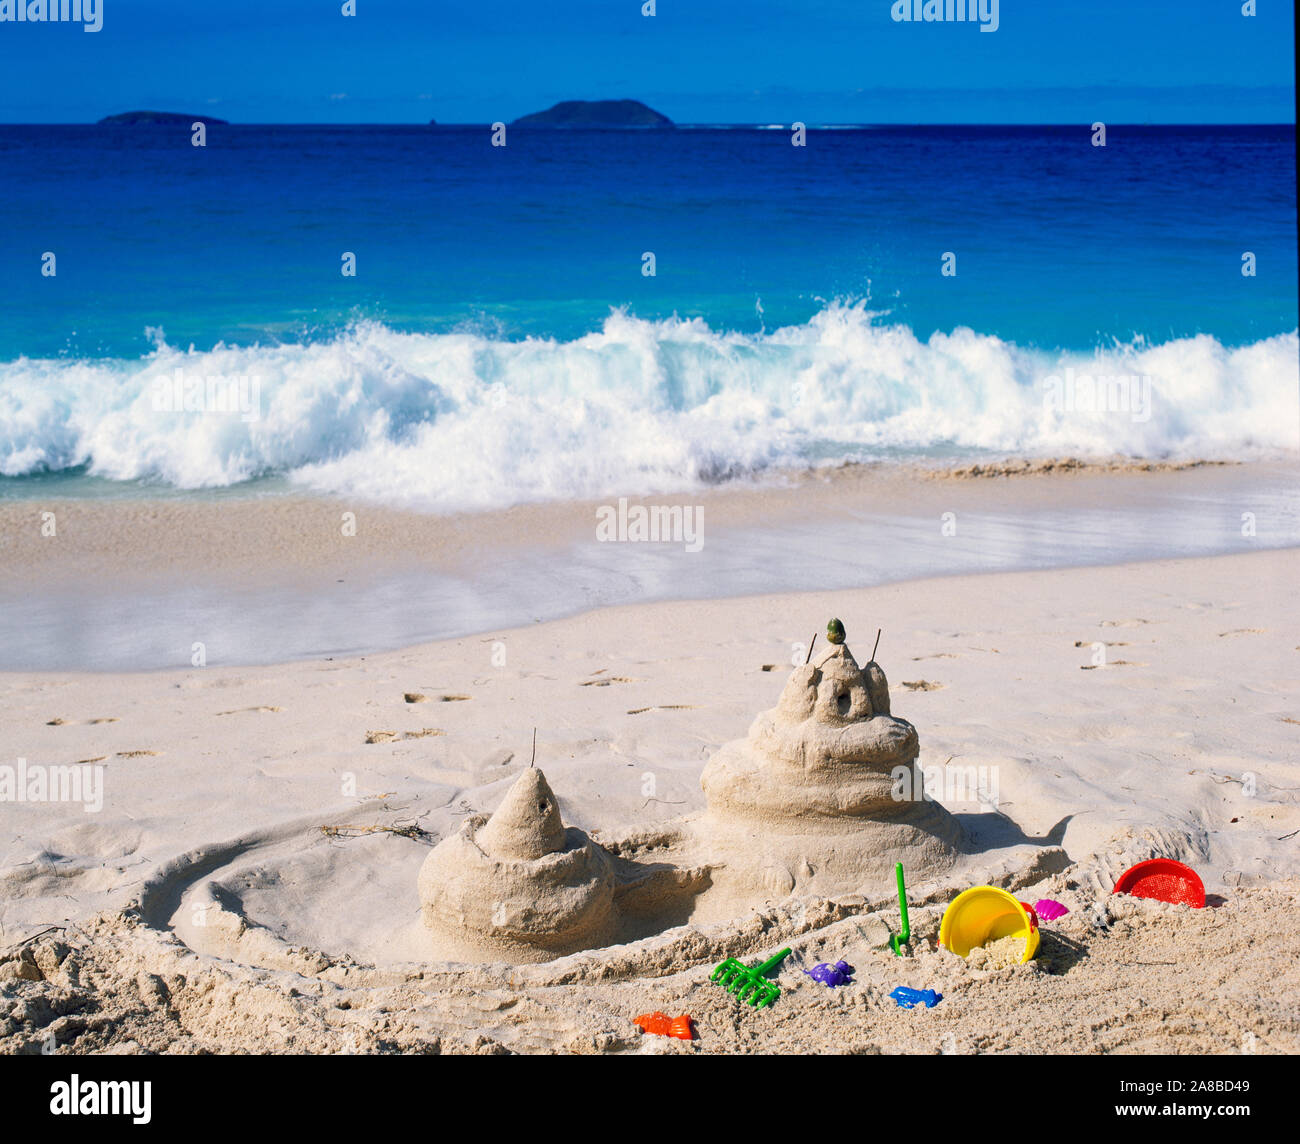 Sand castles on beach with sea in background, Saint John, US Virgin Islands Stock Photo